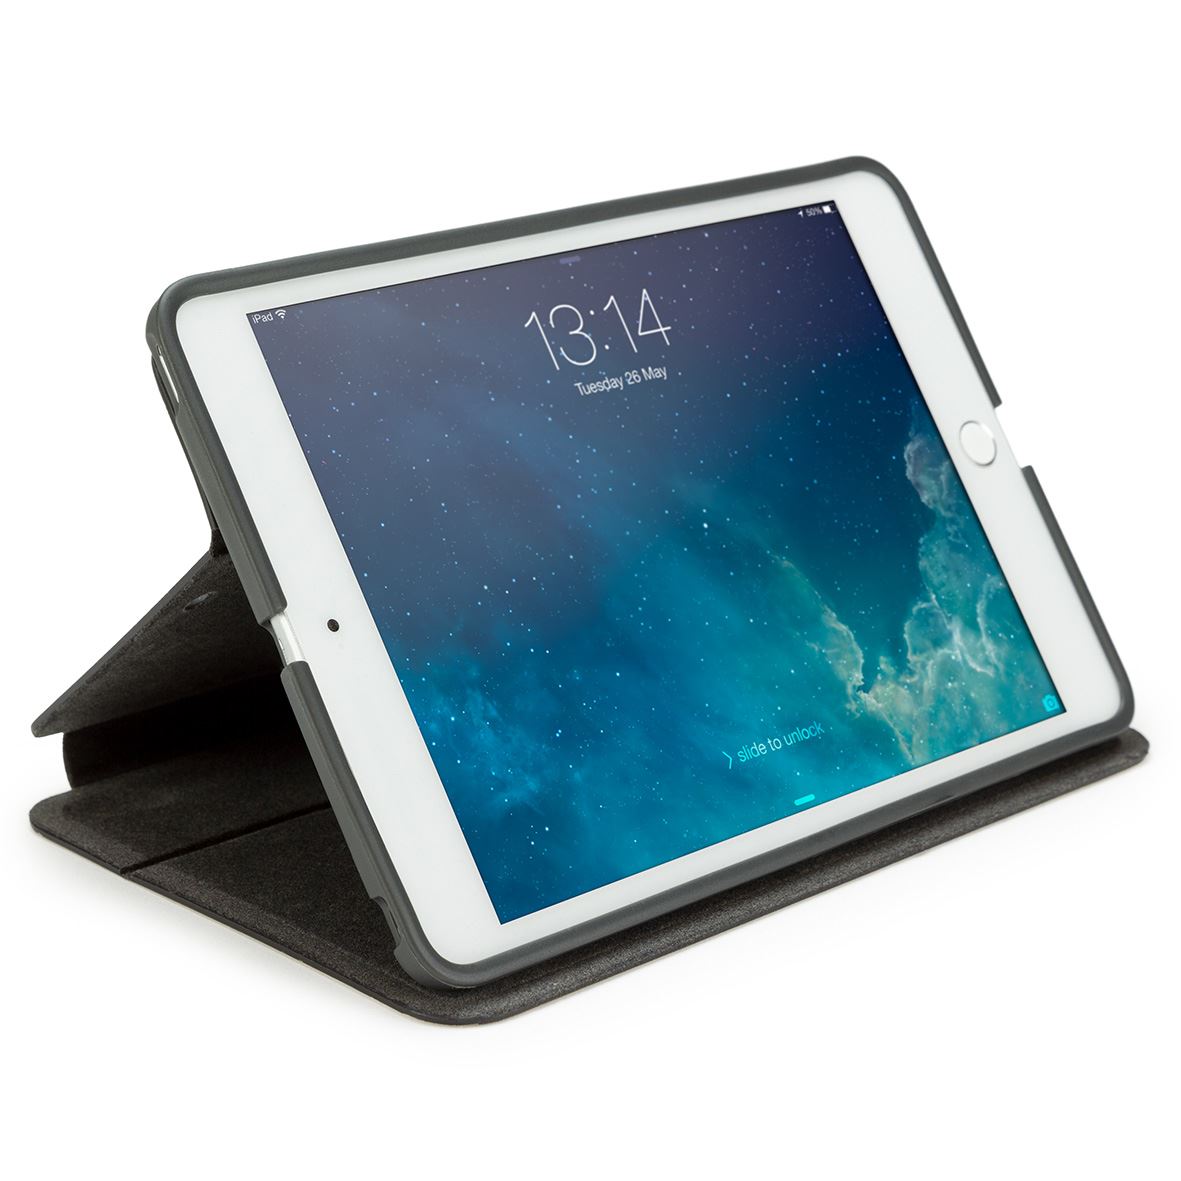 Click-In iPad mini 4,3,2,1 Tablet Case - Black